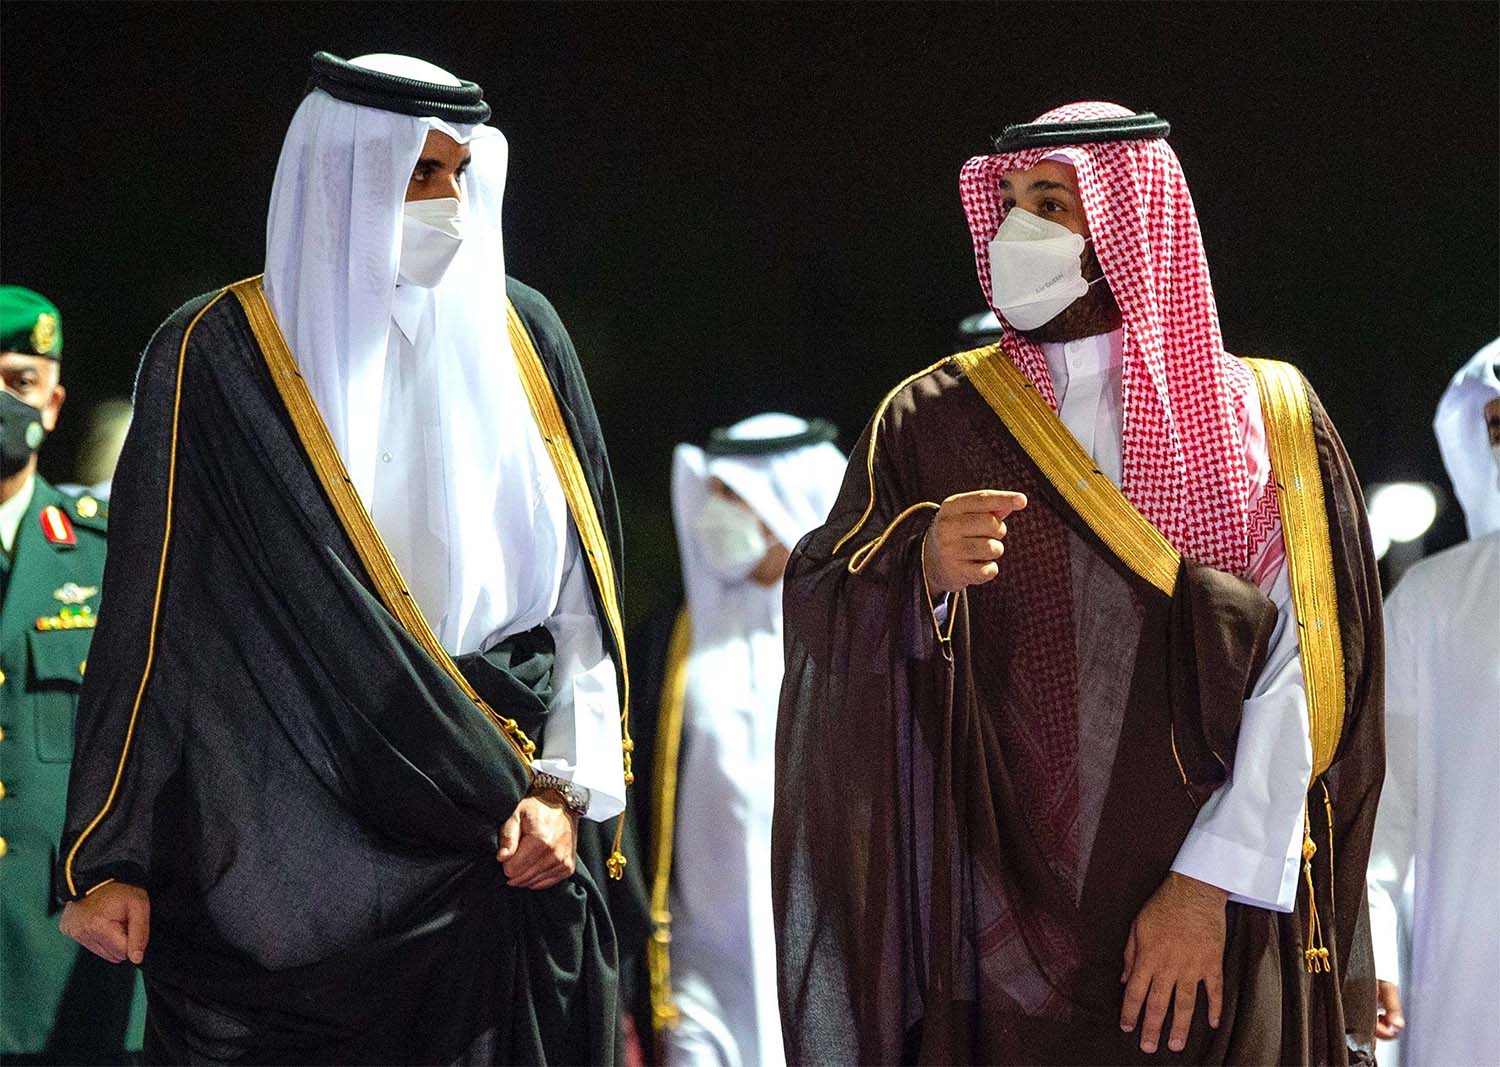 Qatar's emir was last in Saudi Arabia for a high-level Gulf Arab summit that took place in January 